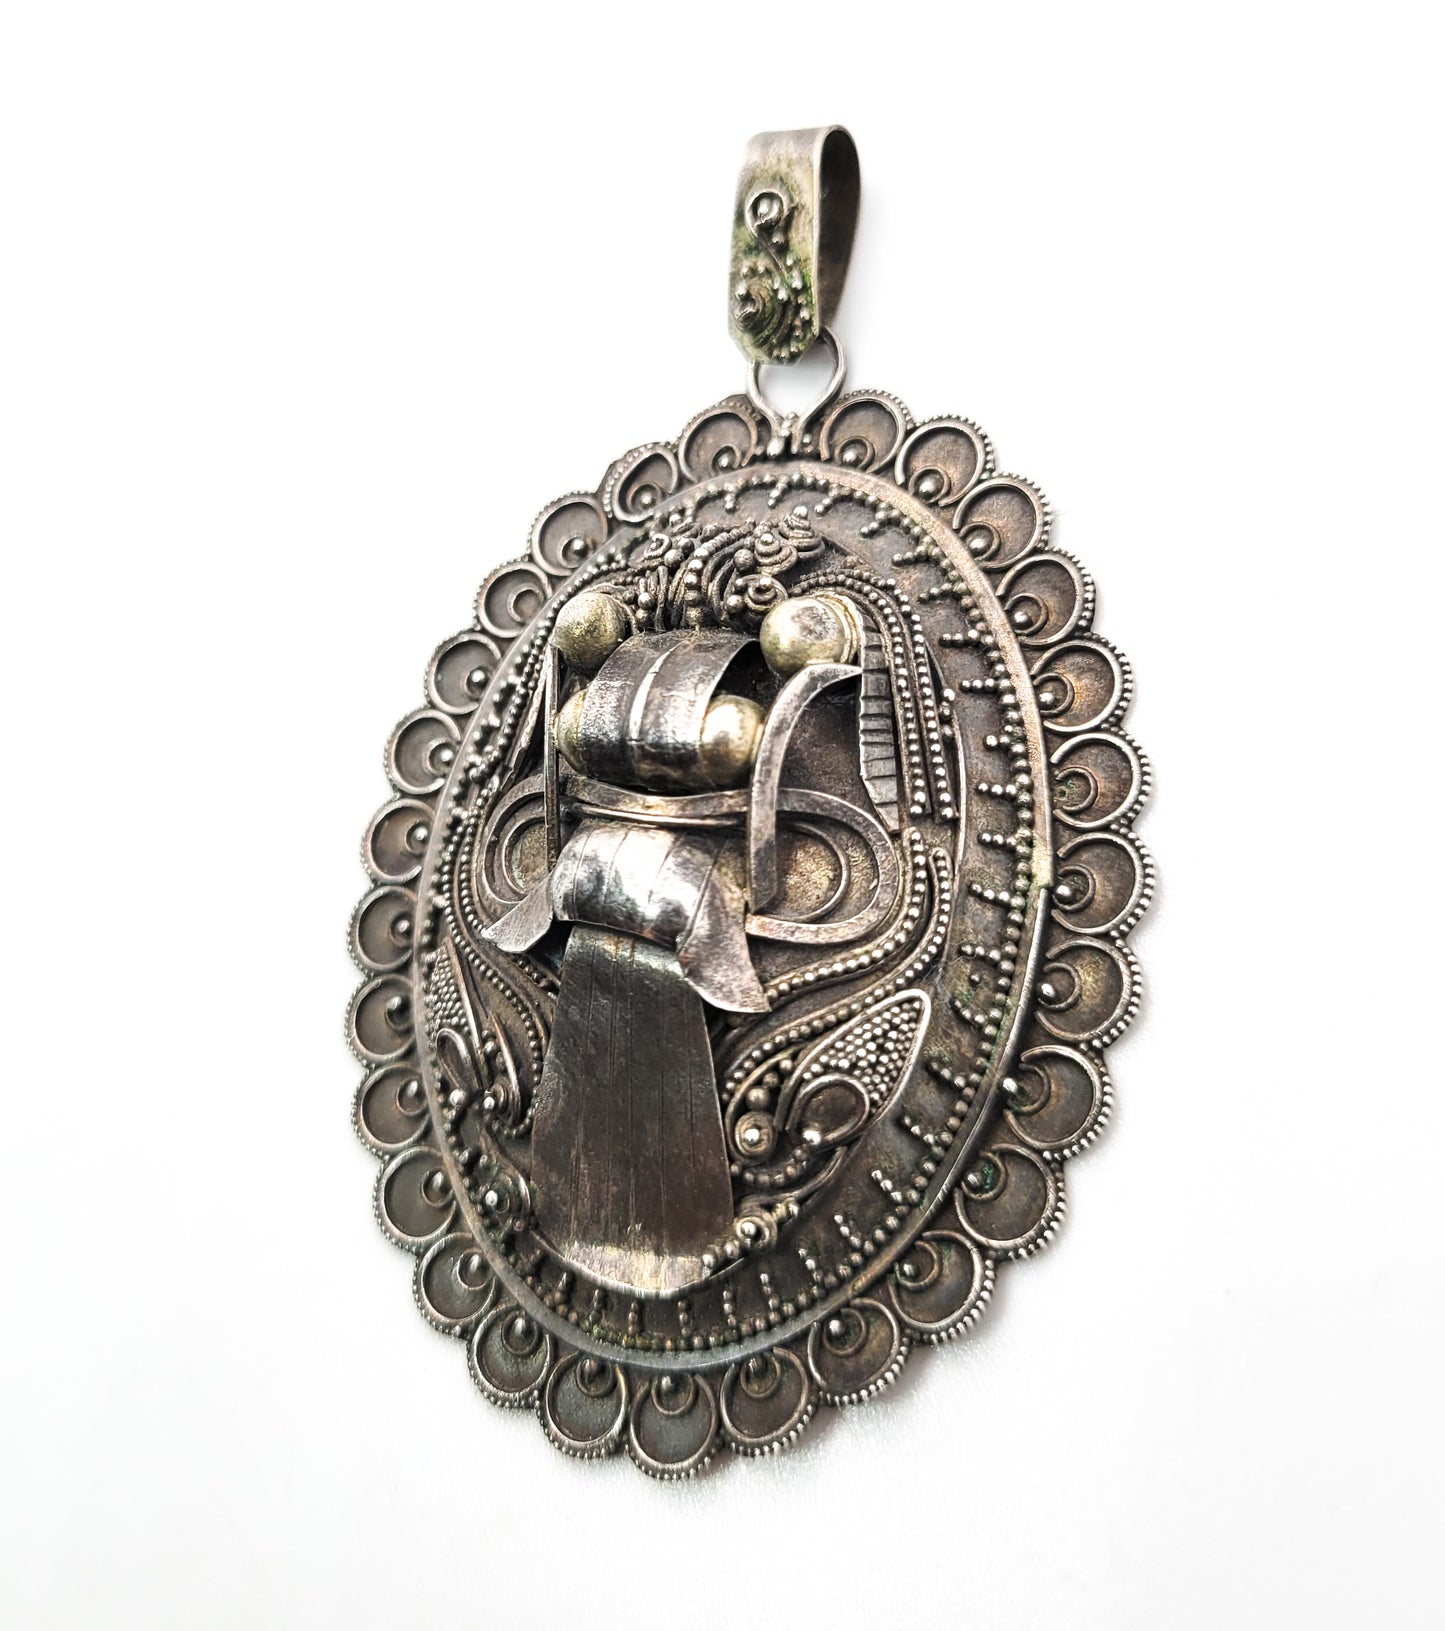 Rangda Balinese demon Queen Large mask sterling silver vintage pendant